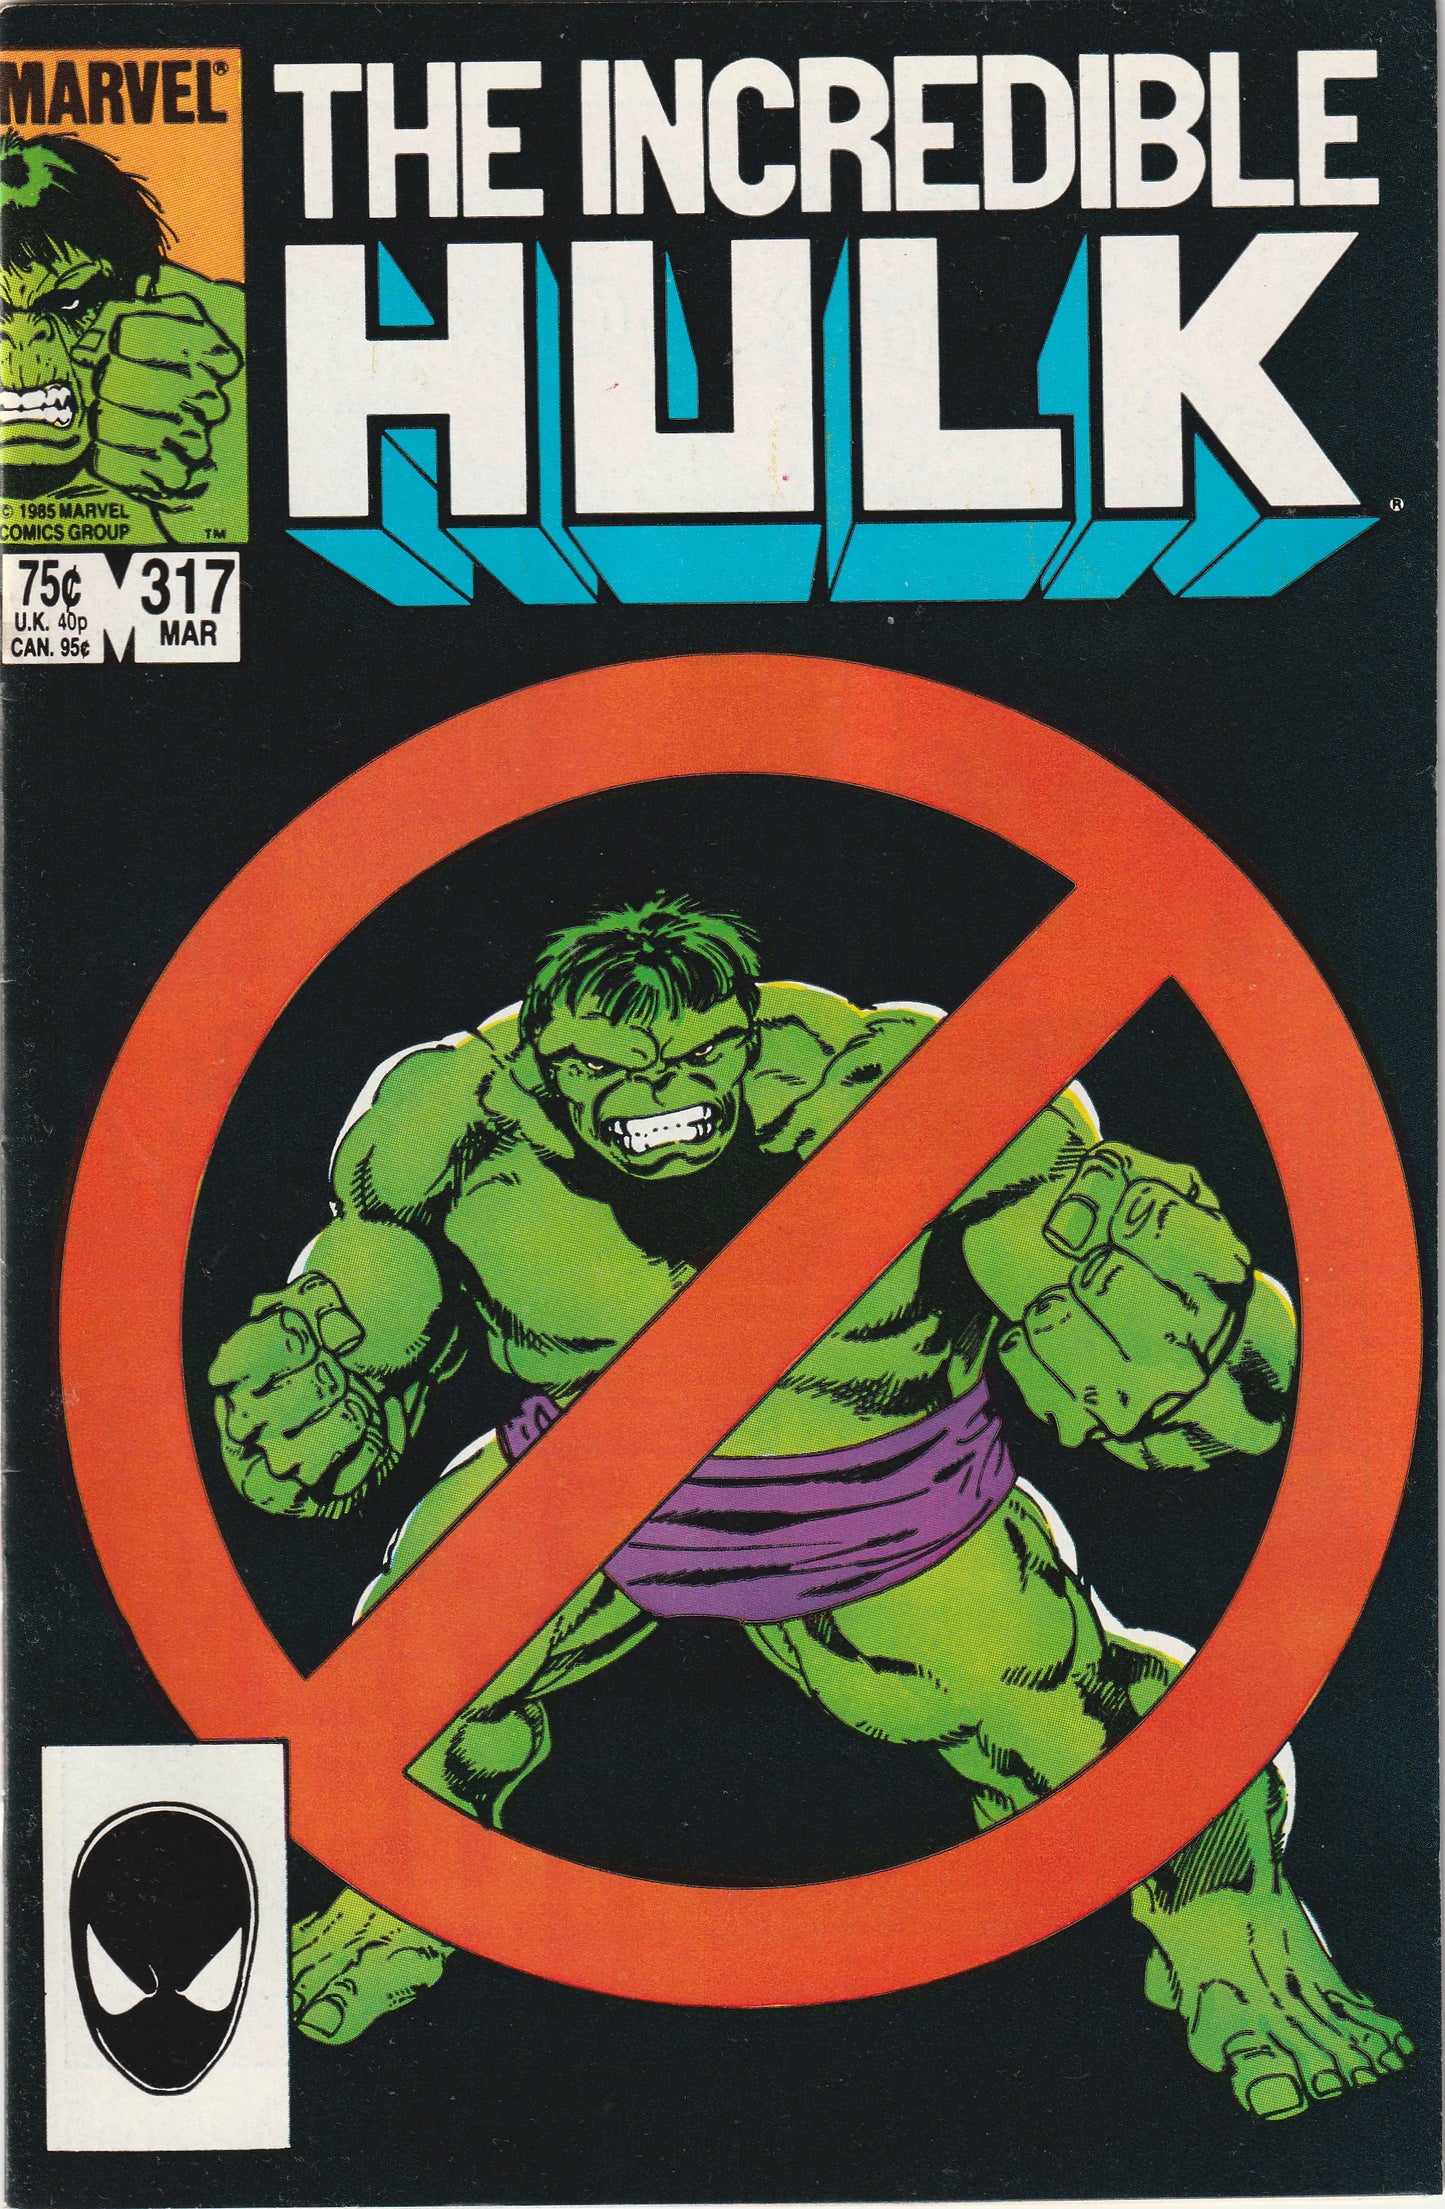 Incredible Hulk #317 (1986) - 1st Appearance of 2nd Hulk Busters